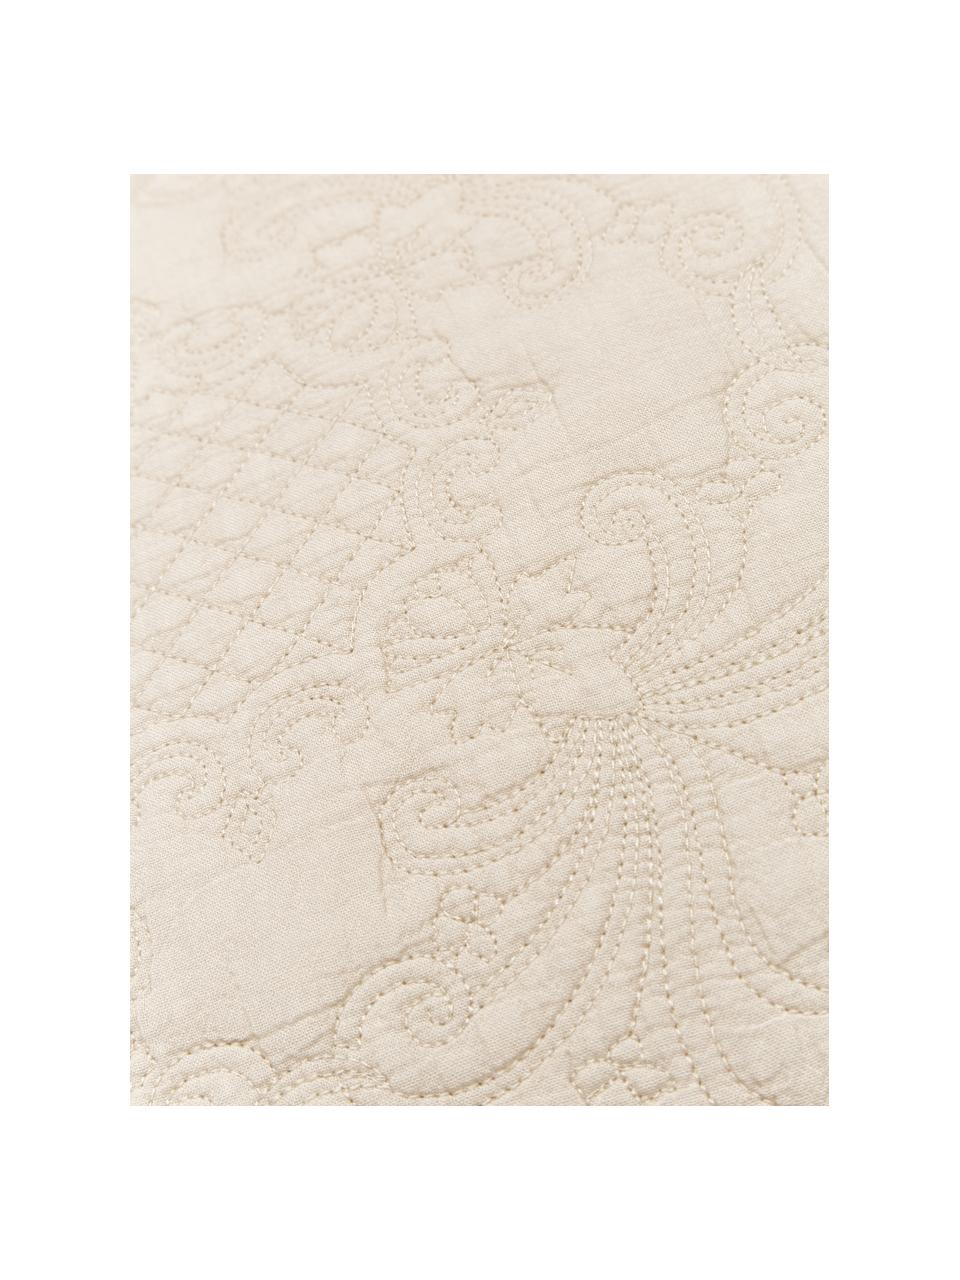 Federa arredo ricamata in cotone beige Madlon, 100% cotone, Beige, Larg. 45 x Lung. 45 cm